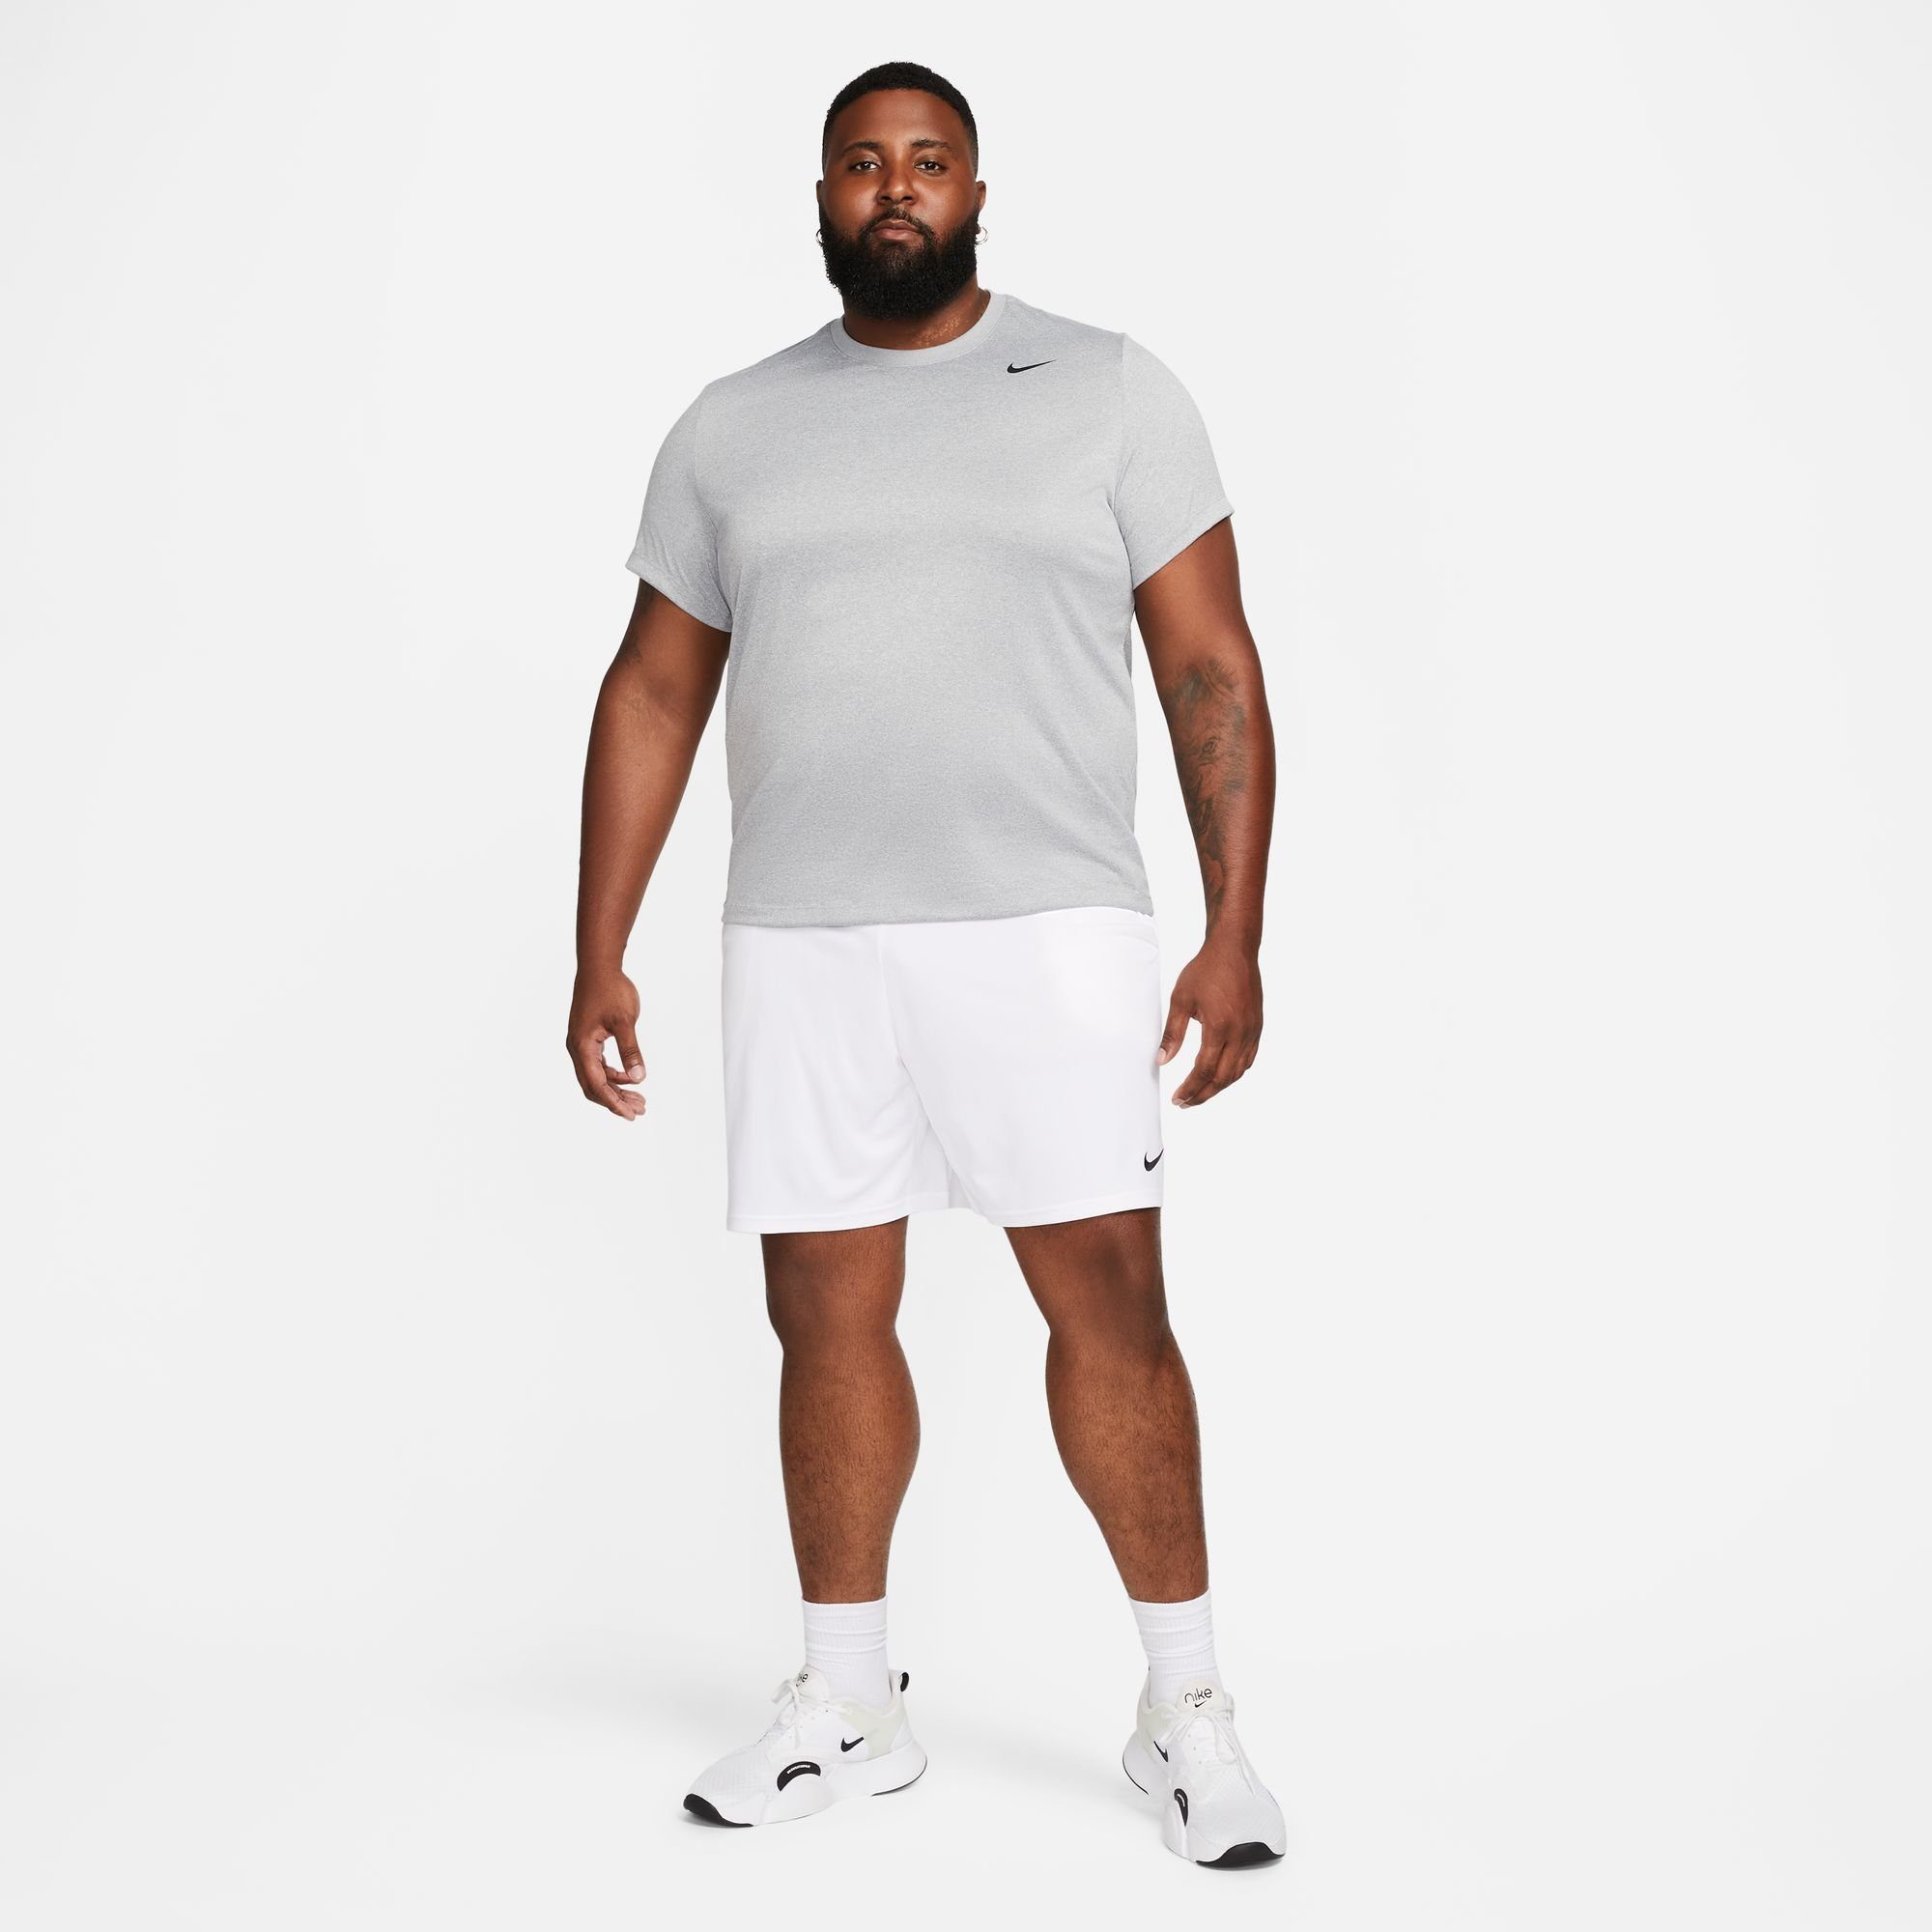 Nike Trainingsshirt SILVER/HTR/BLACK GREY/FLT MEN'S FITNESS DRI-FIT T-SHIRT LEGEND TUMBLED